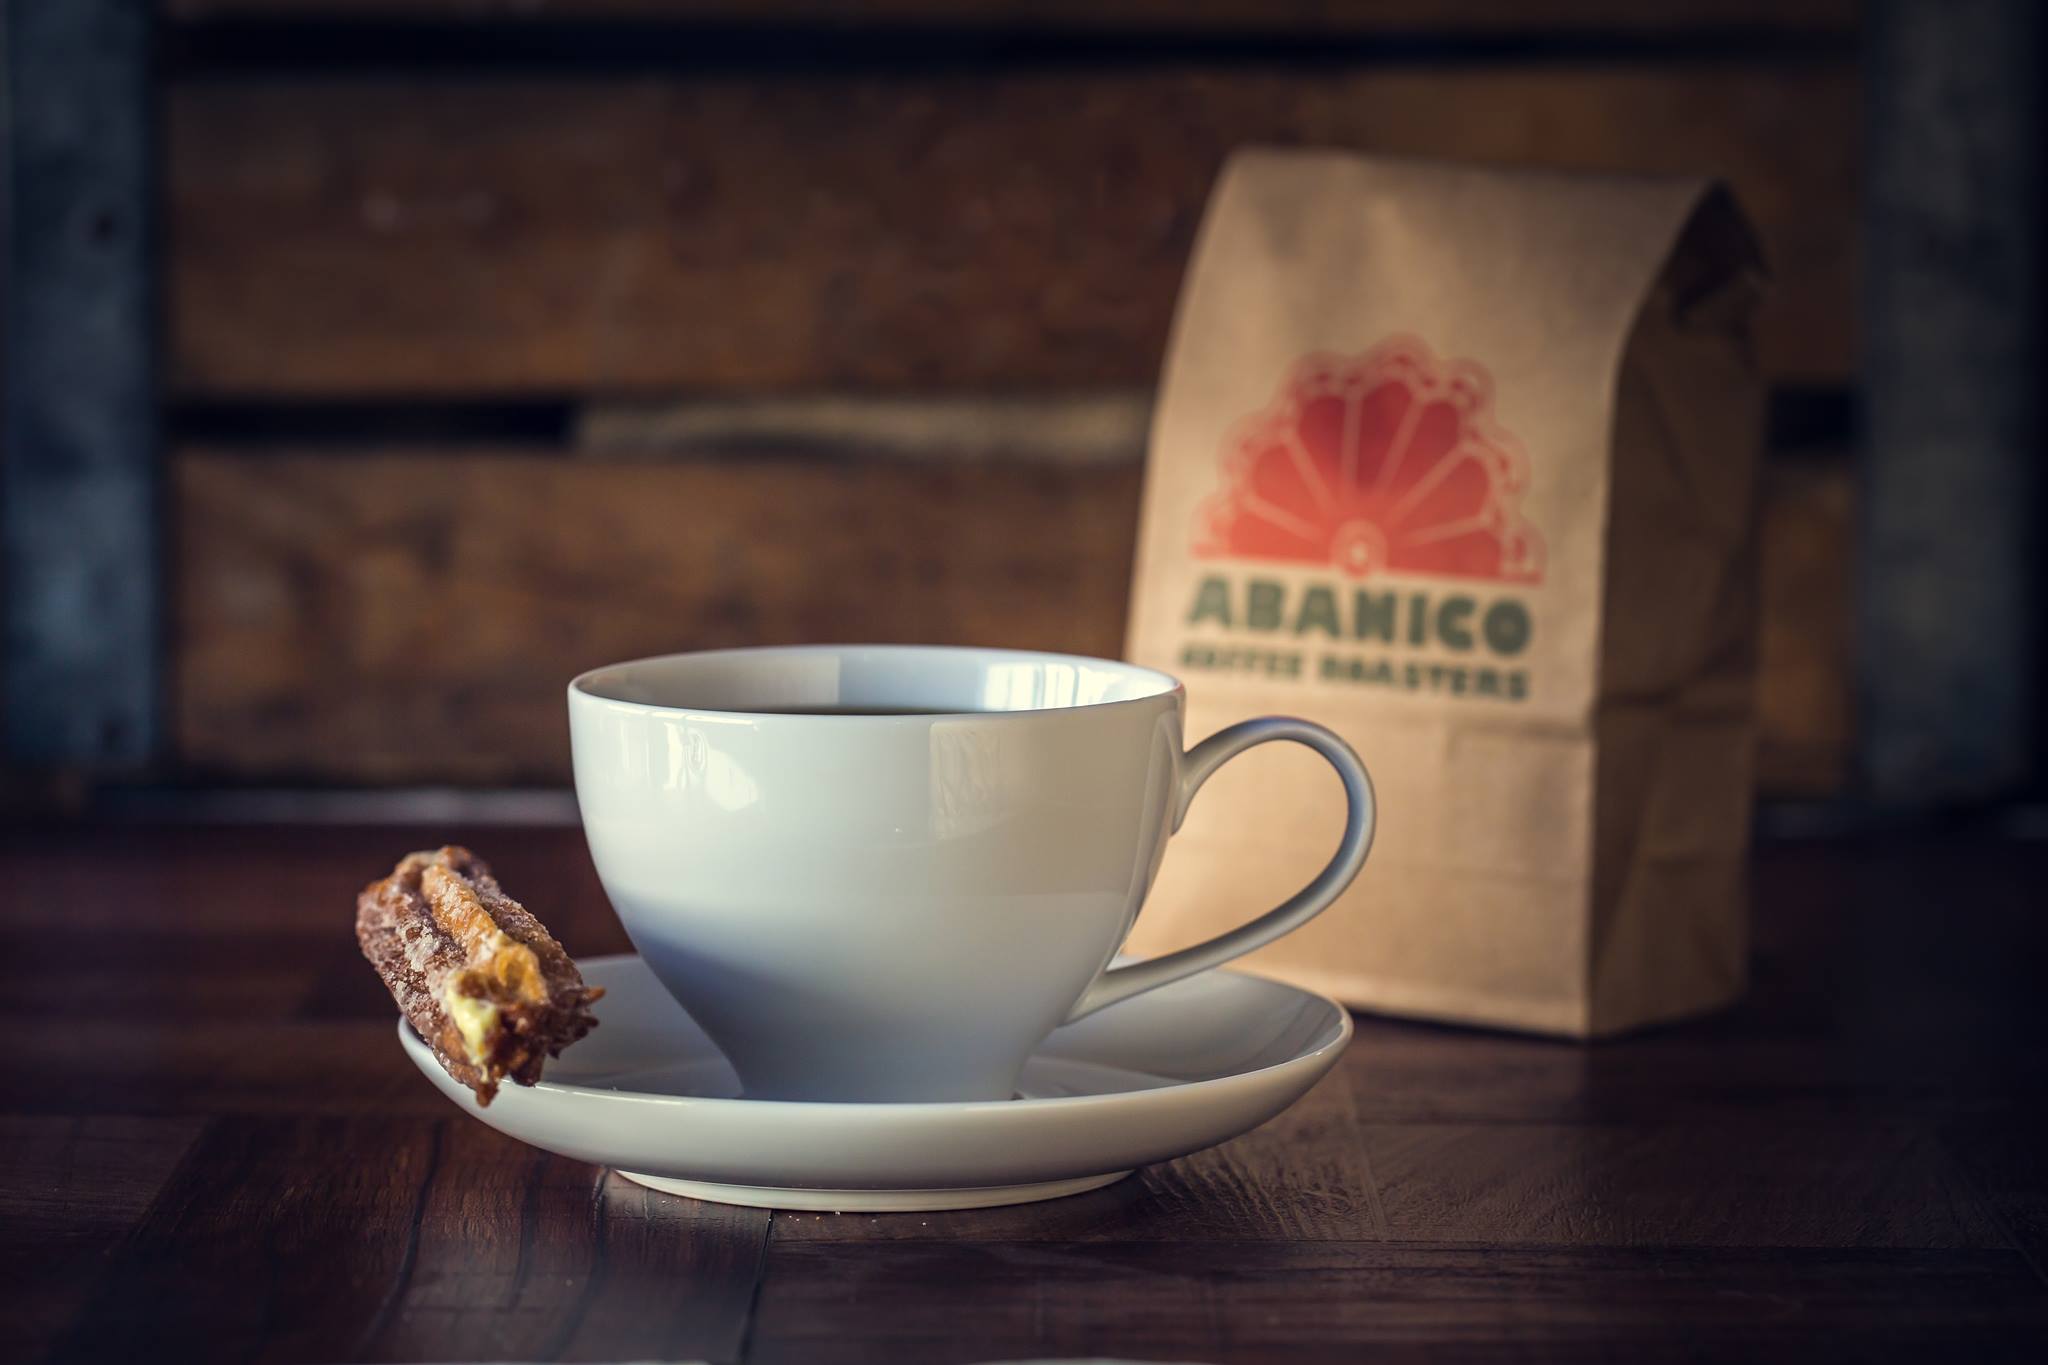 Abanico Coffee Roasters